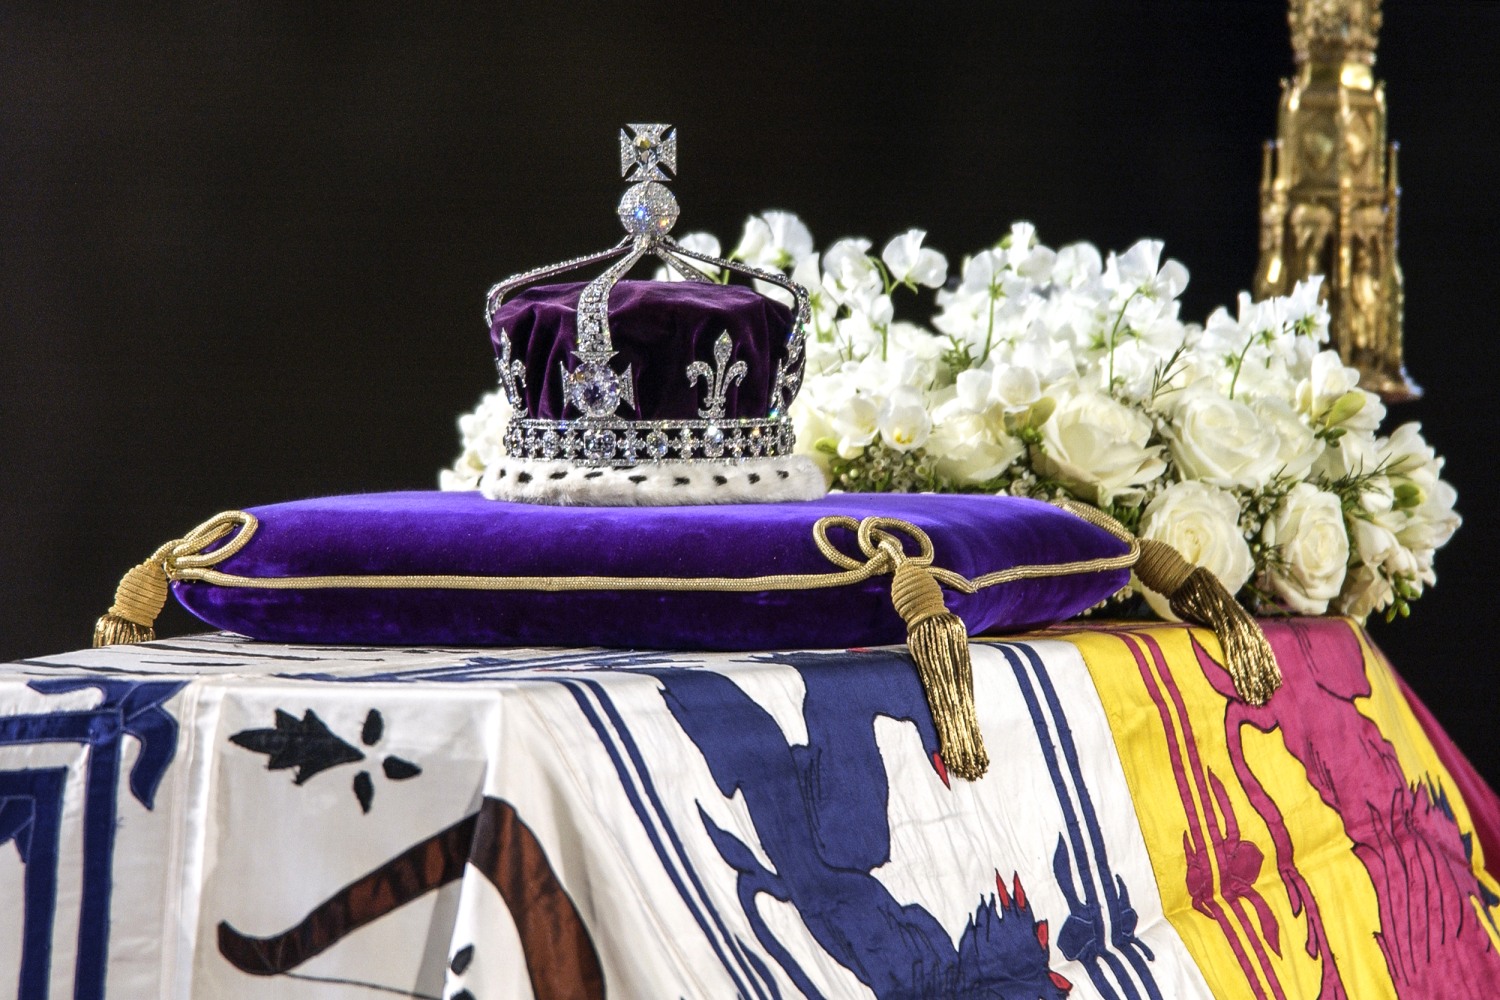 Kohinoor  The most important diamond on Queen Elizabeth's crown